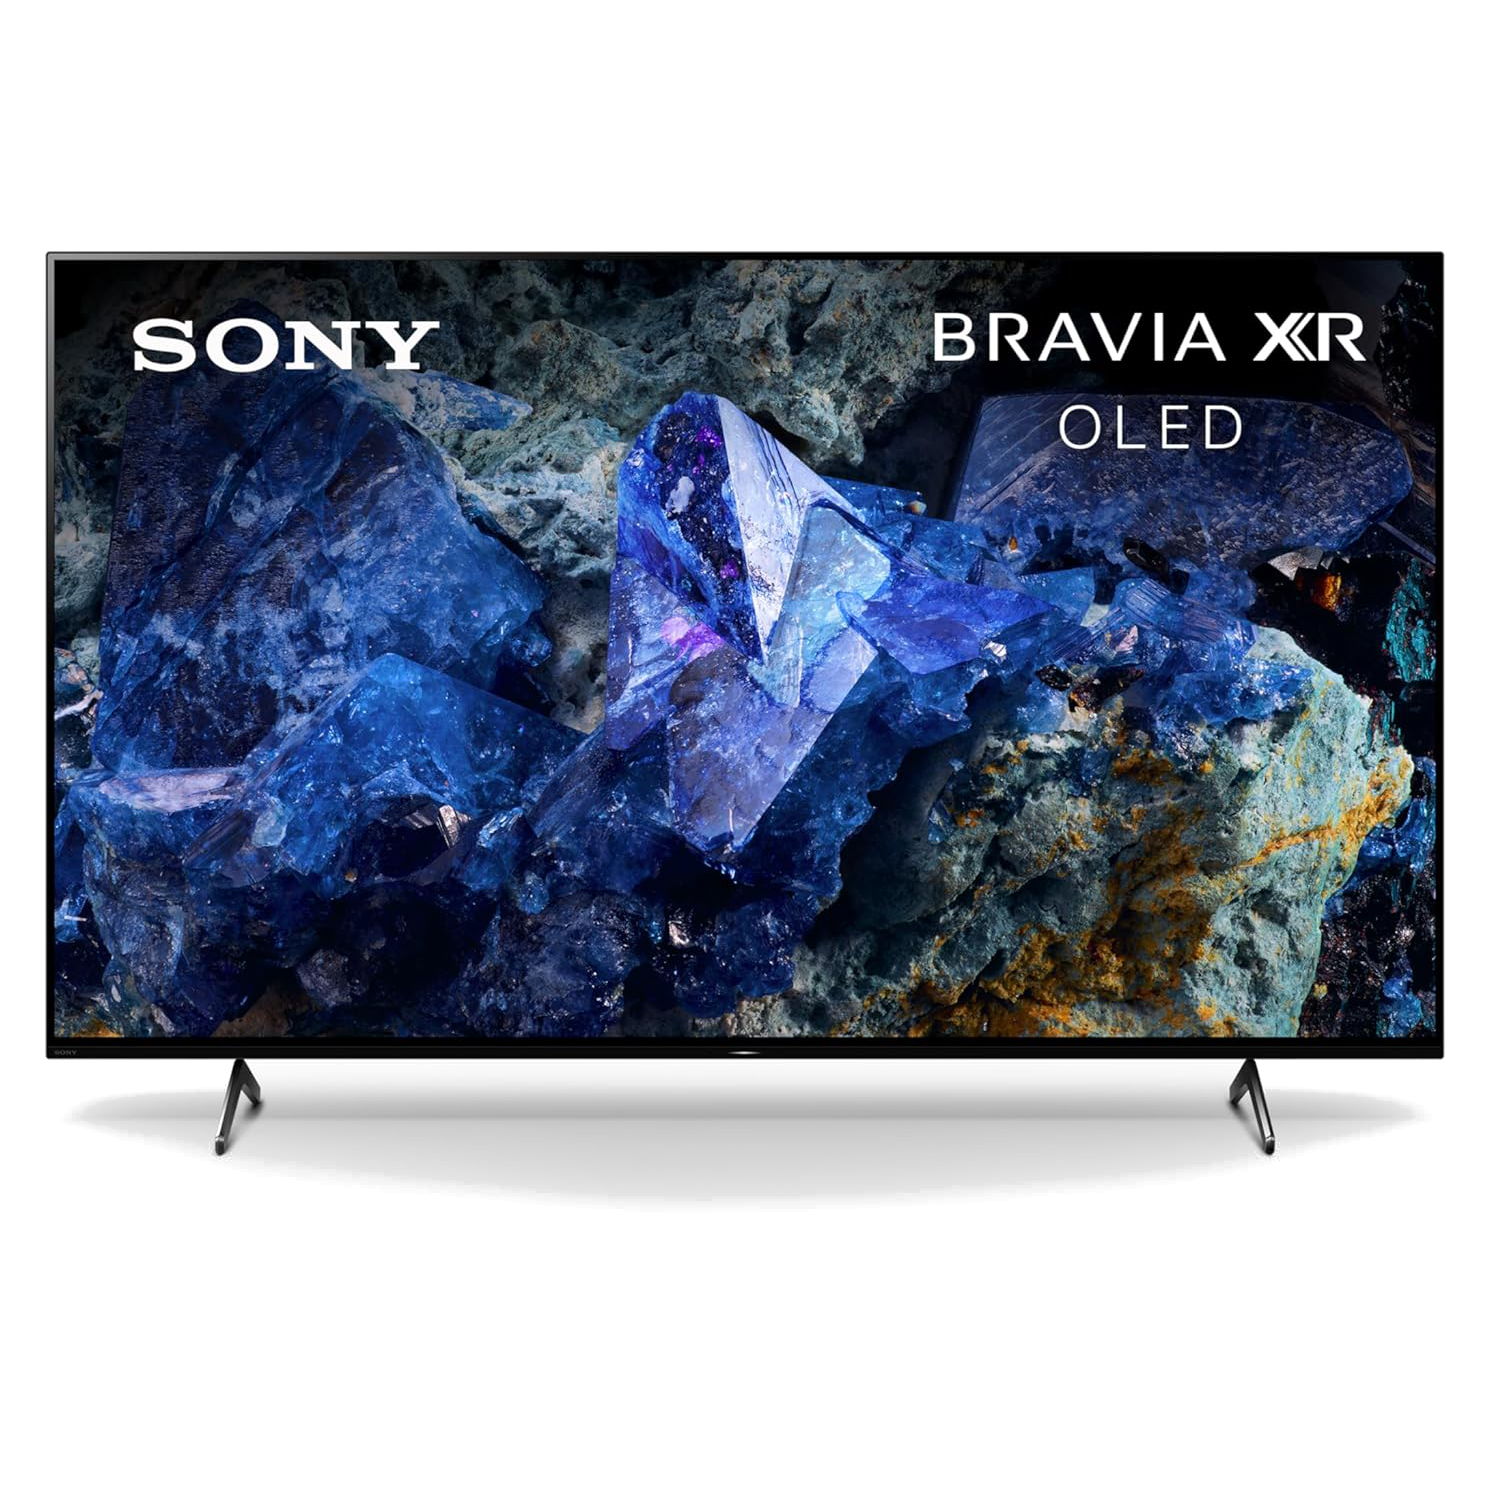 sony-bravia-xr-a75l-oled-tv-render-01